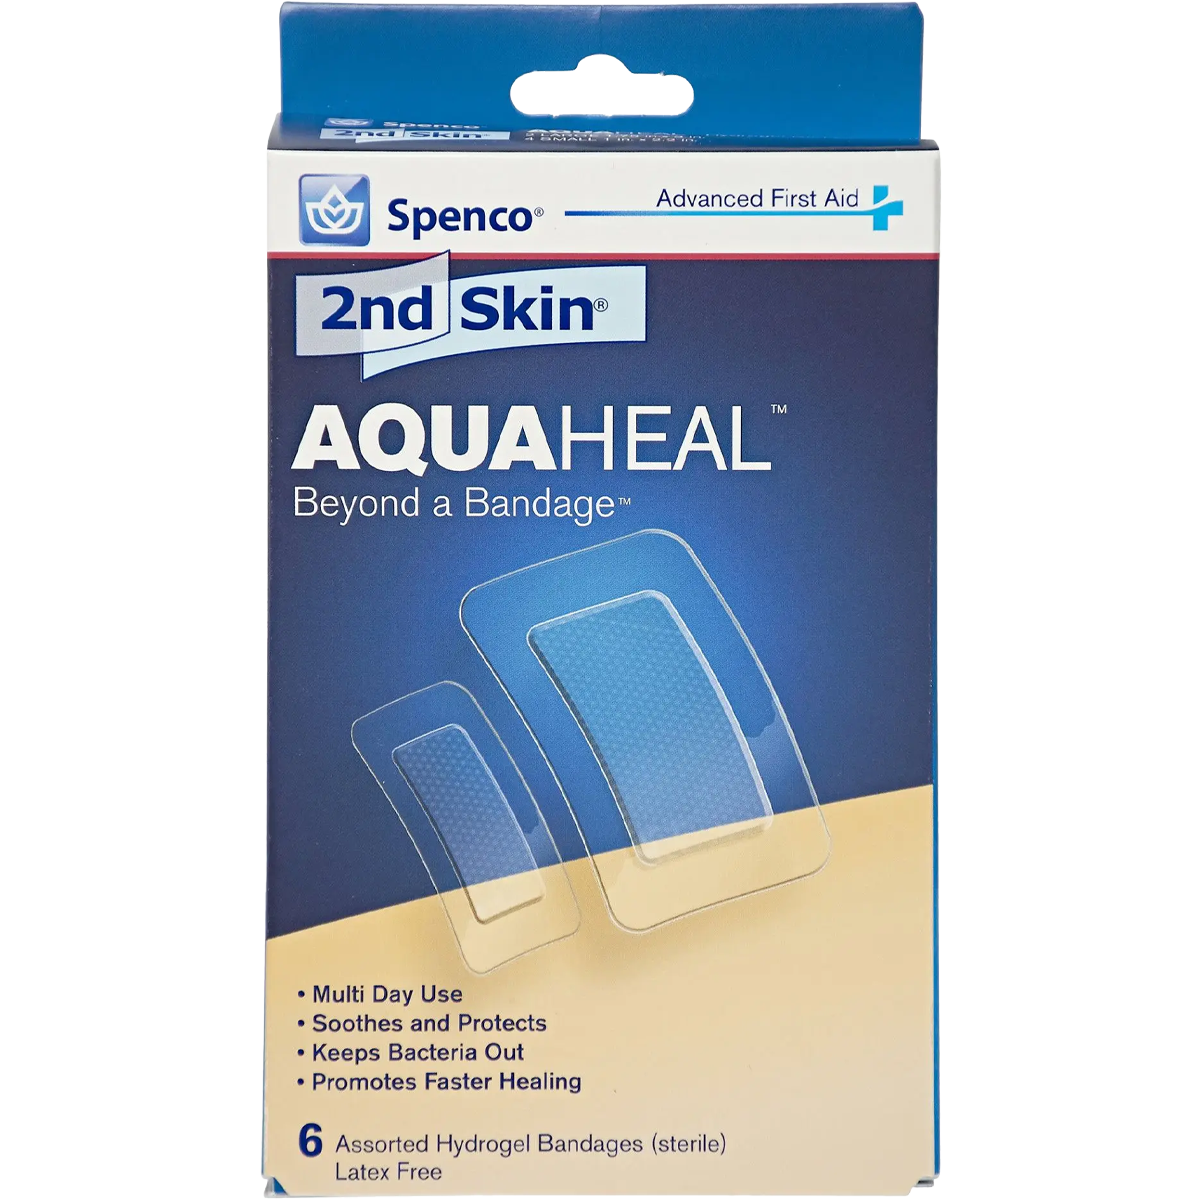 2nd Skin AquaHeal Hydrogel Bandages alternate view